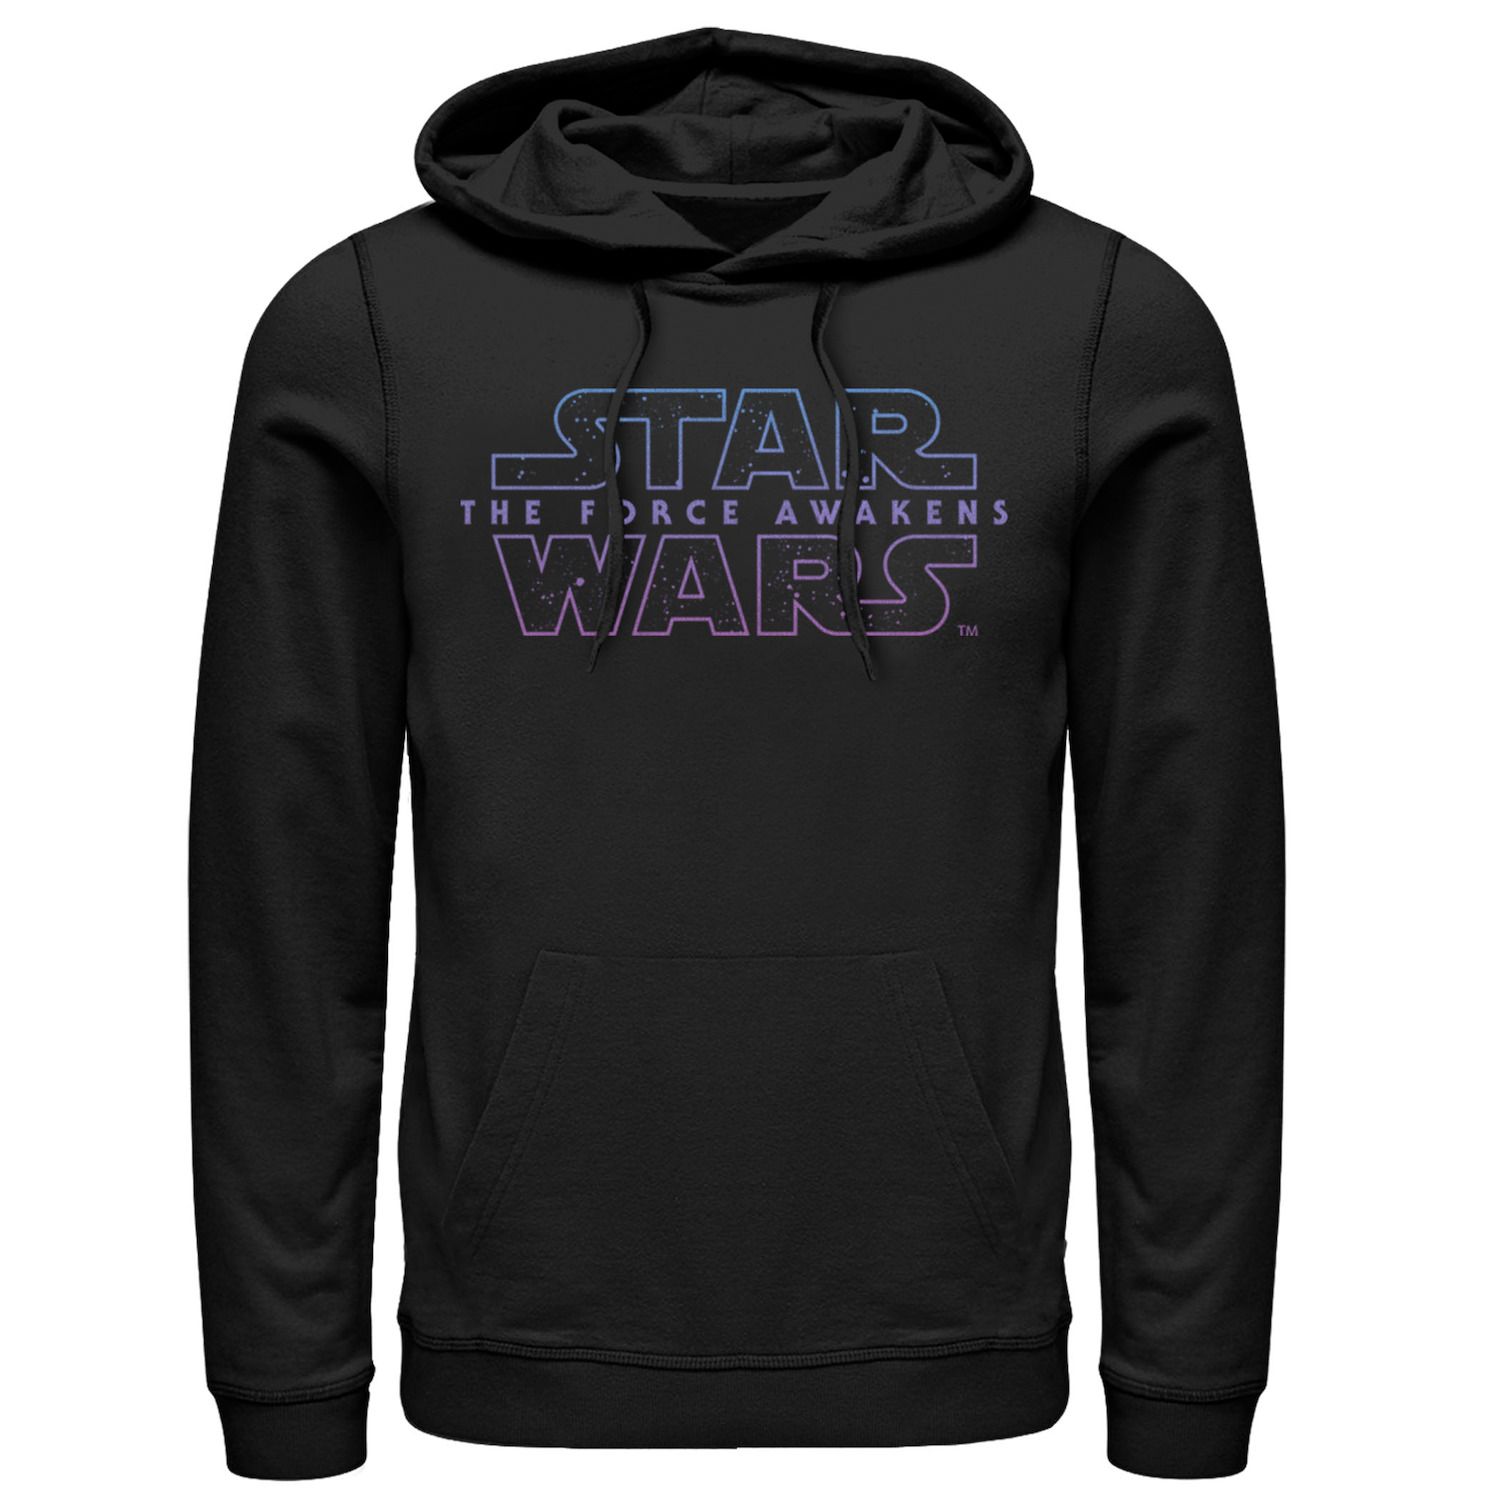 Мужская толстовка с логотипом Star Wars The Force Awakens foster alan dean star wars the force awakens